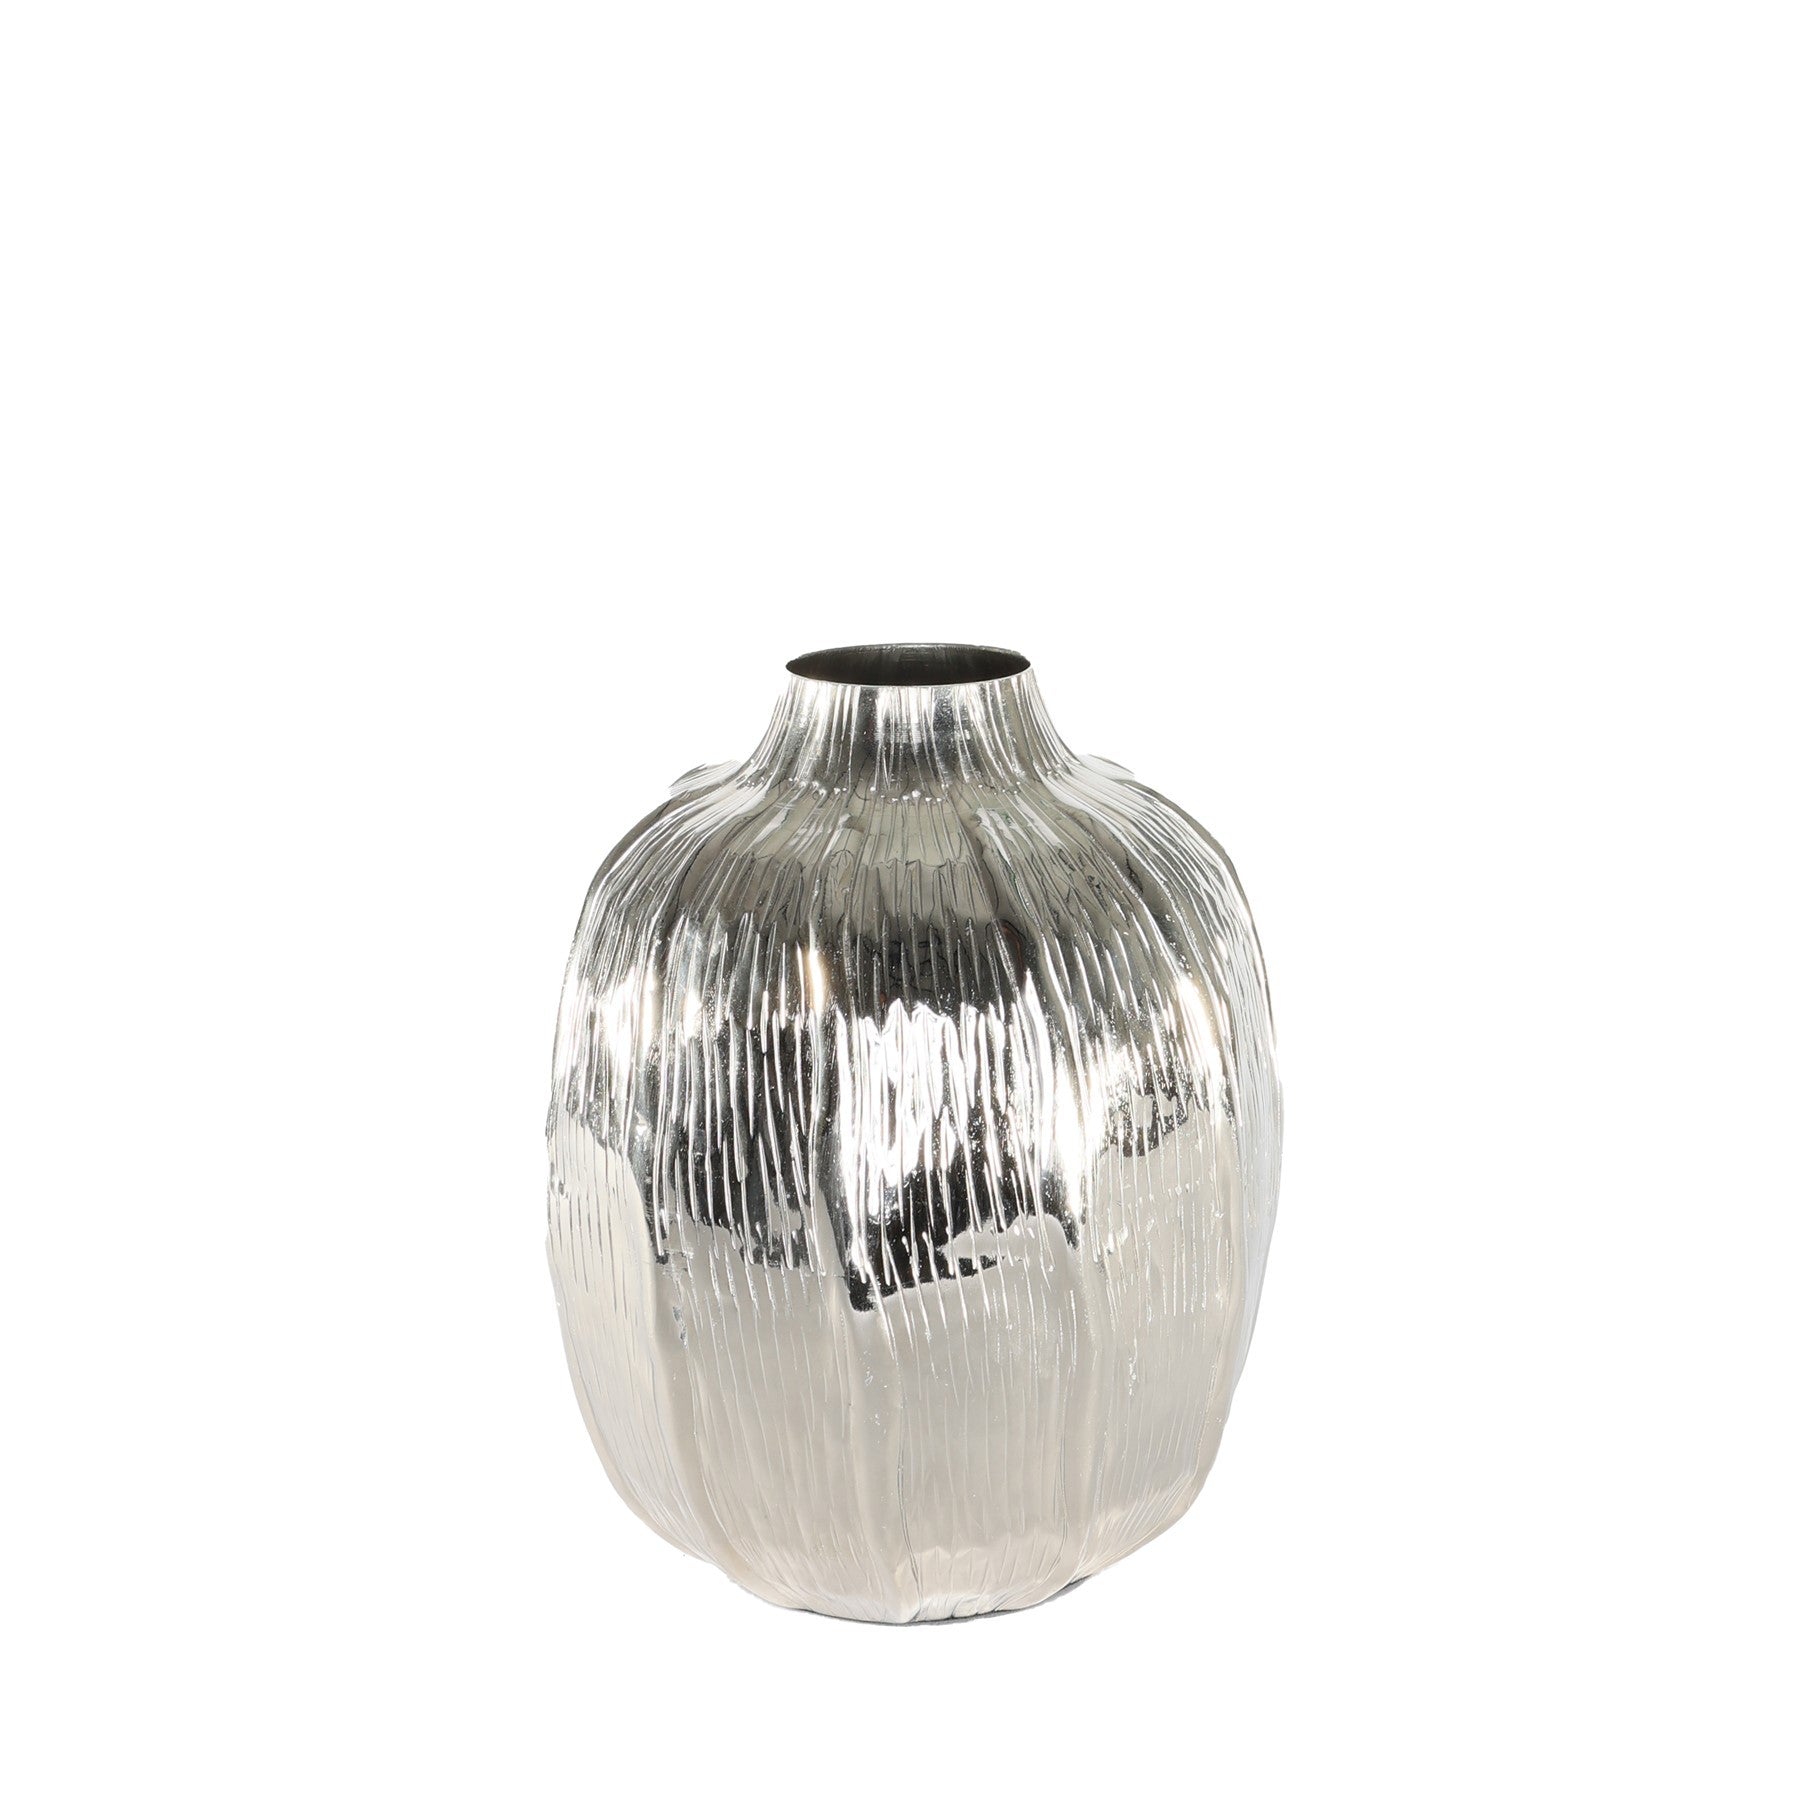 View Silver Eros Poppy Vase H26 x Dia20cm information